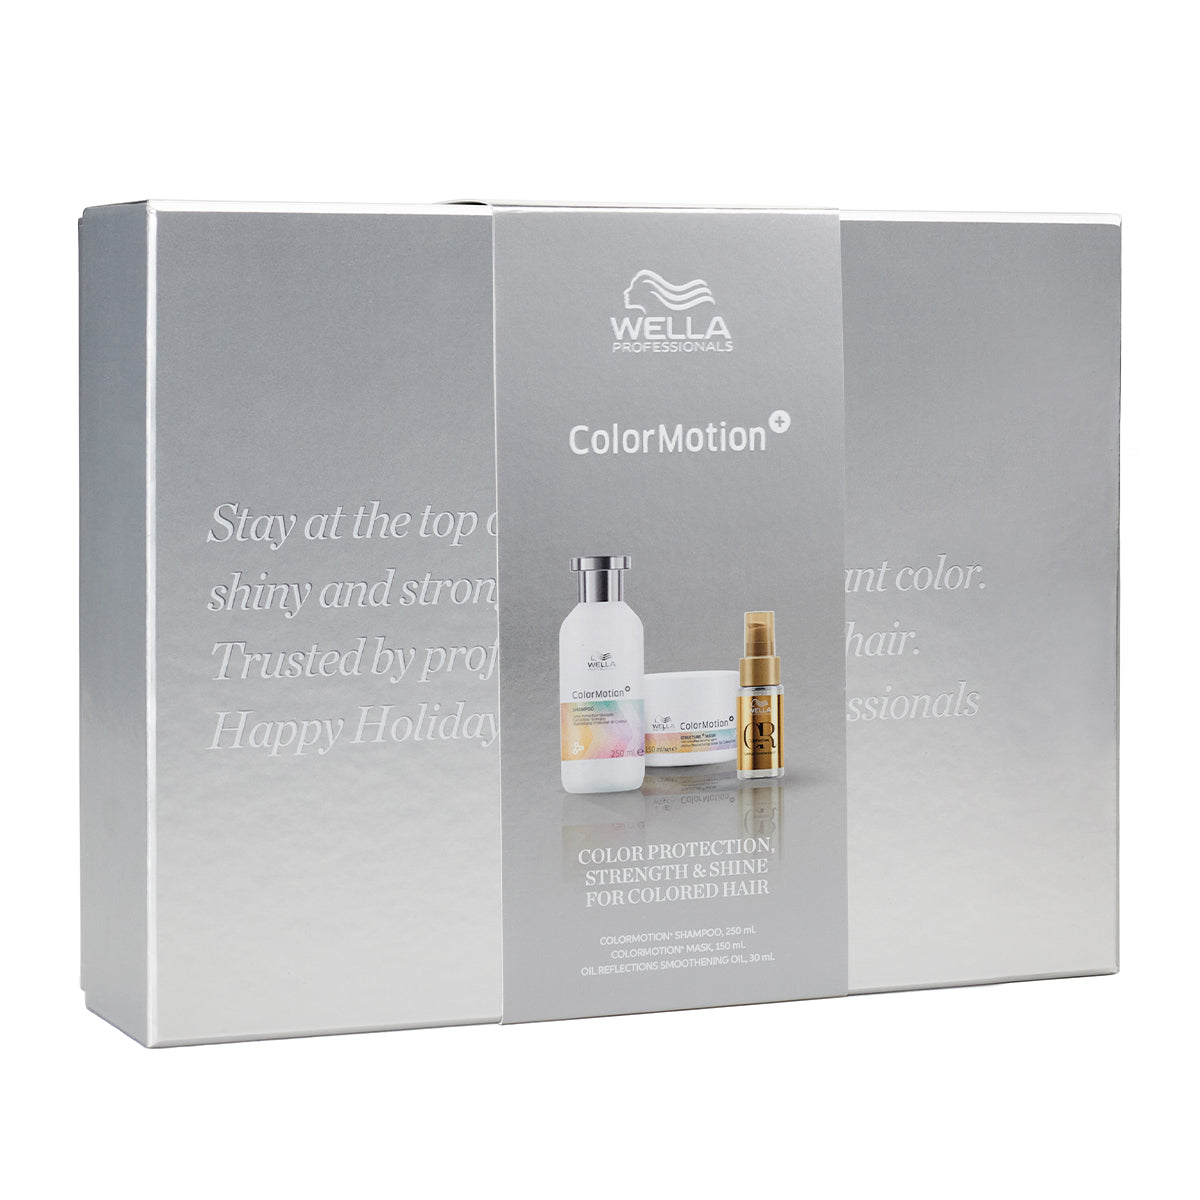 Wella Professionals ColorMotion Box (Shampoo 250ml,Mask 150ml, Oil Reflection 30ml